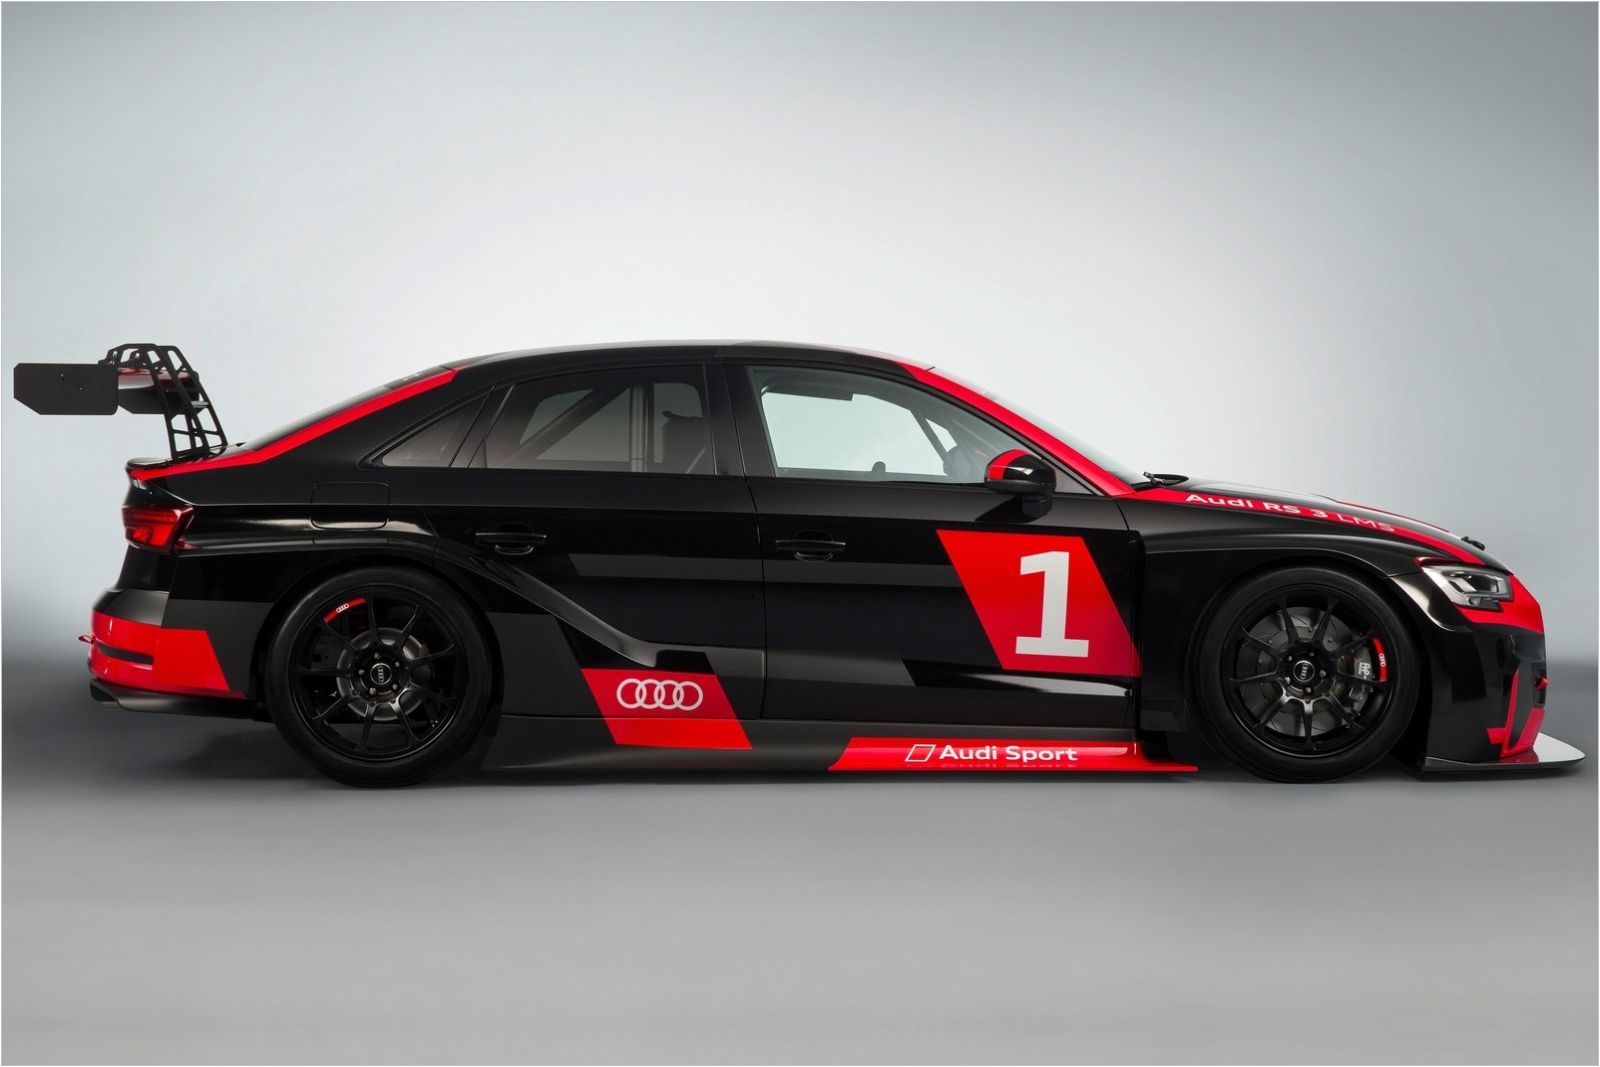 Audi RS3 LMS Racecar, 1600x1067px, img-4